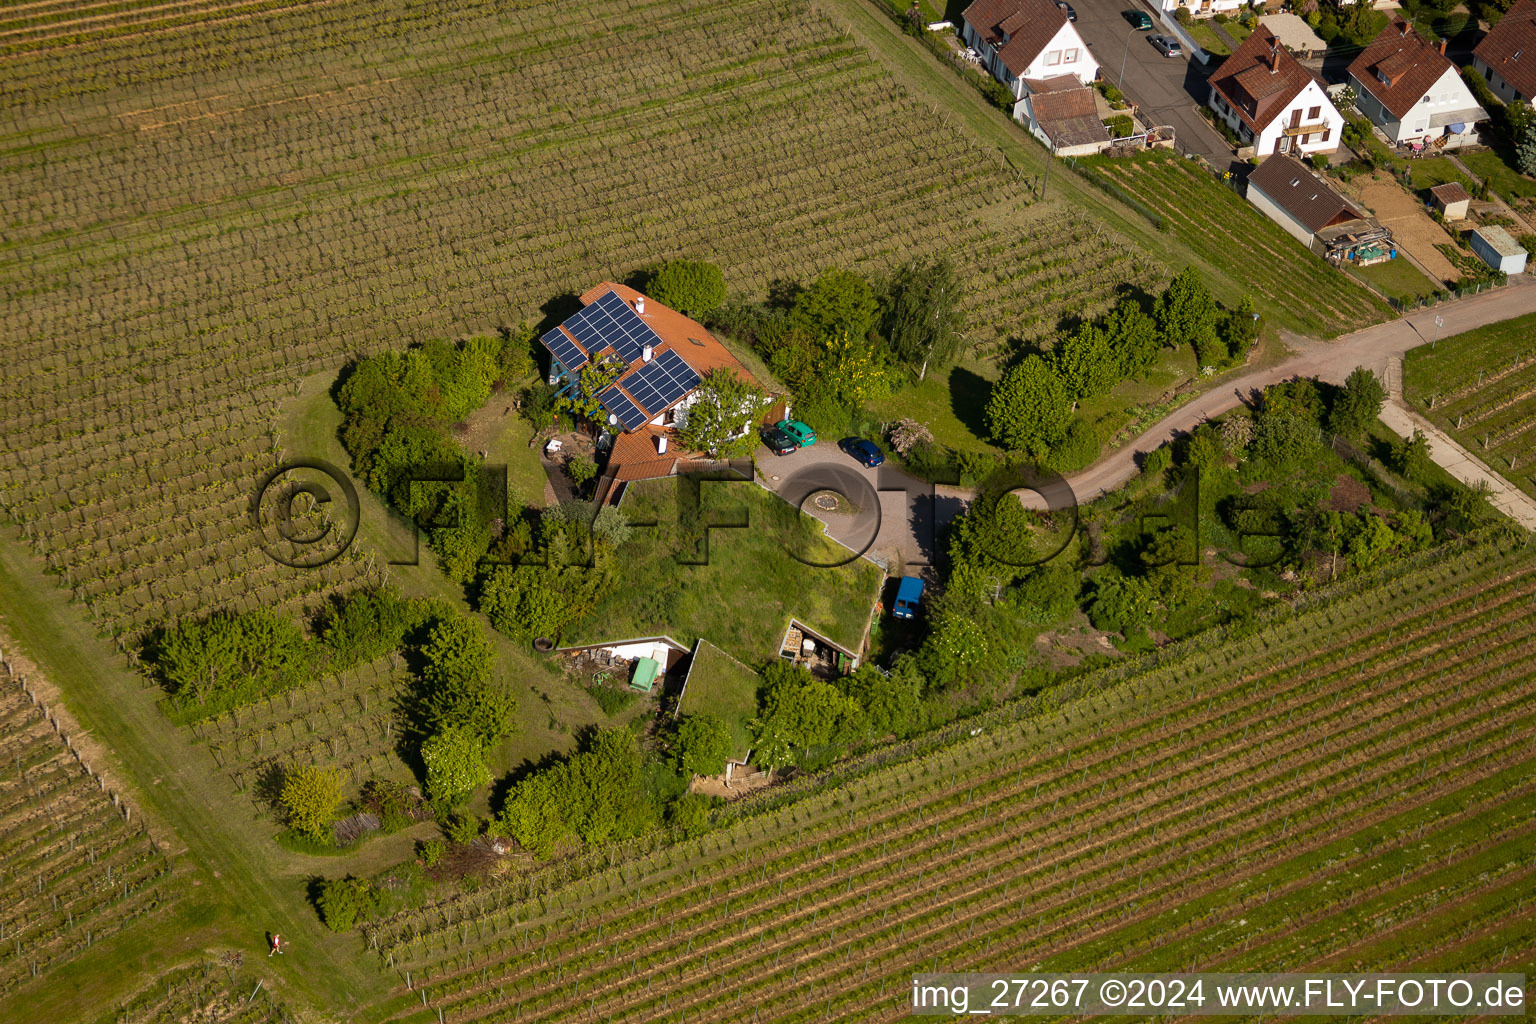 Drone recording of BiolandViticulture Unterm Grassdach Winery Marzolph in the district Wollmesheim in Landau in der Pfalz in the state Rhineland-Palatinate, Germany